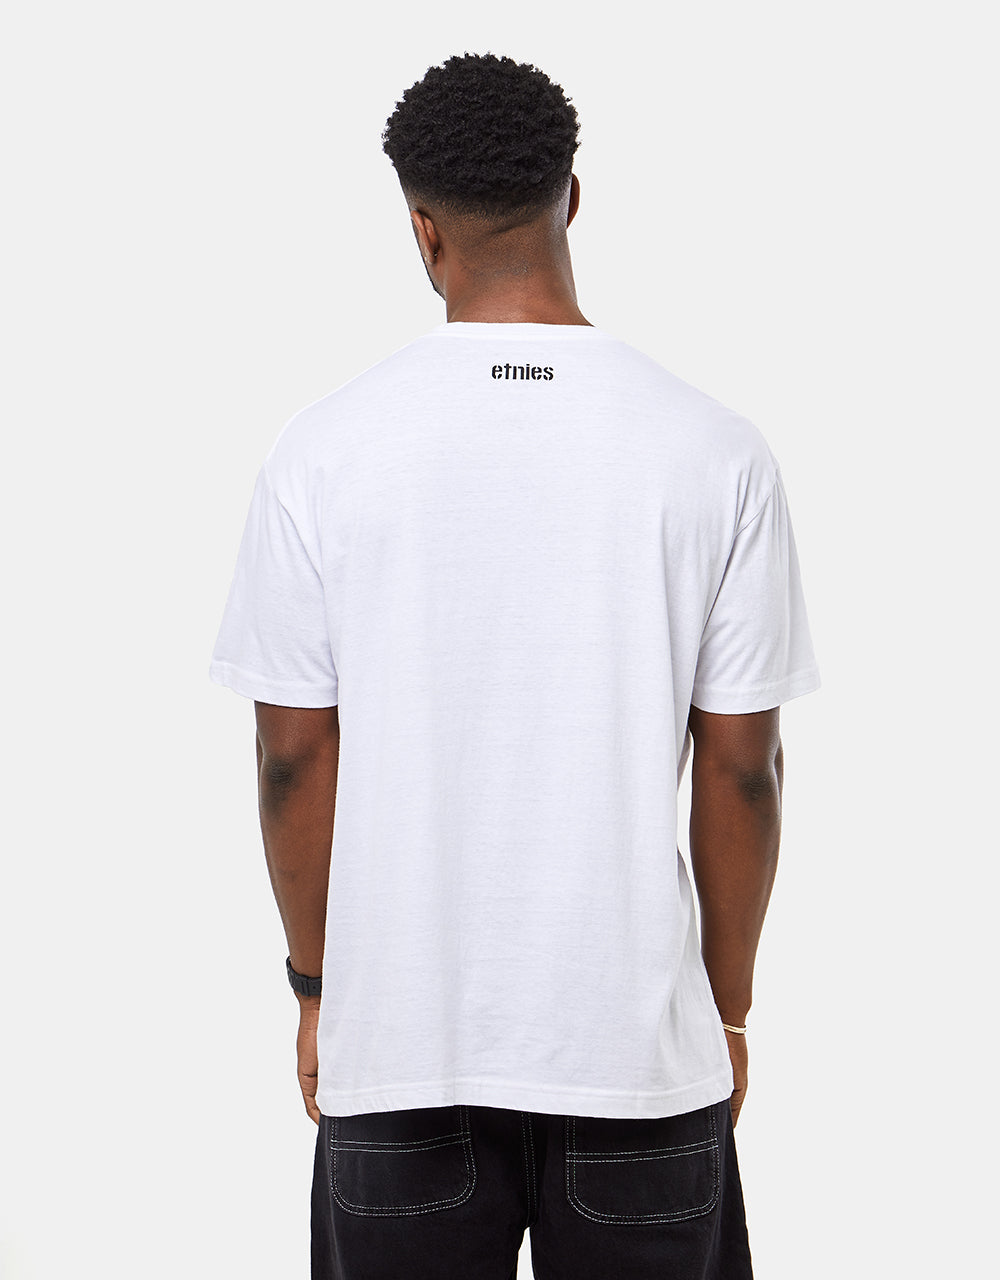 Etnies x Independent T-Shirt - White